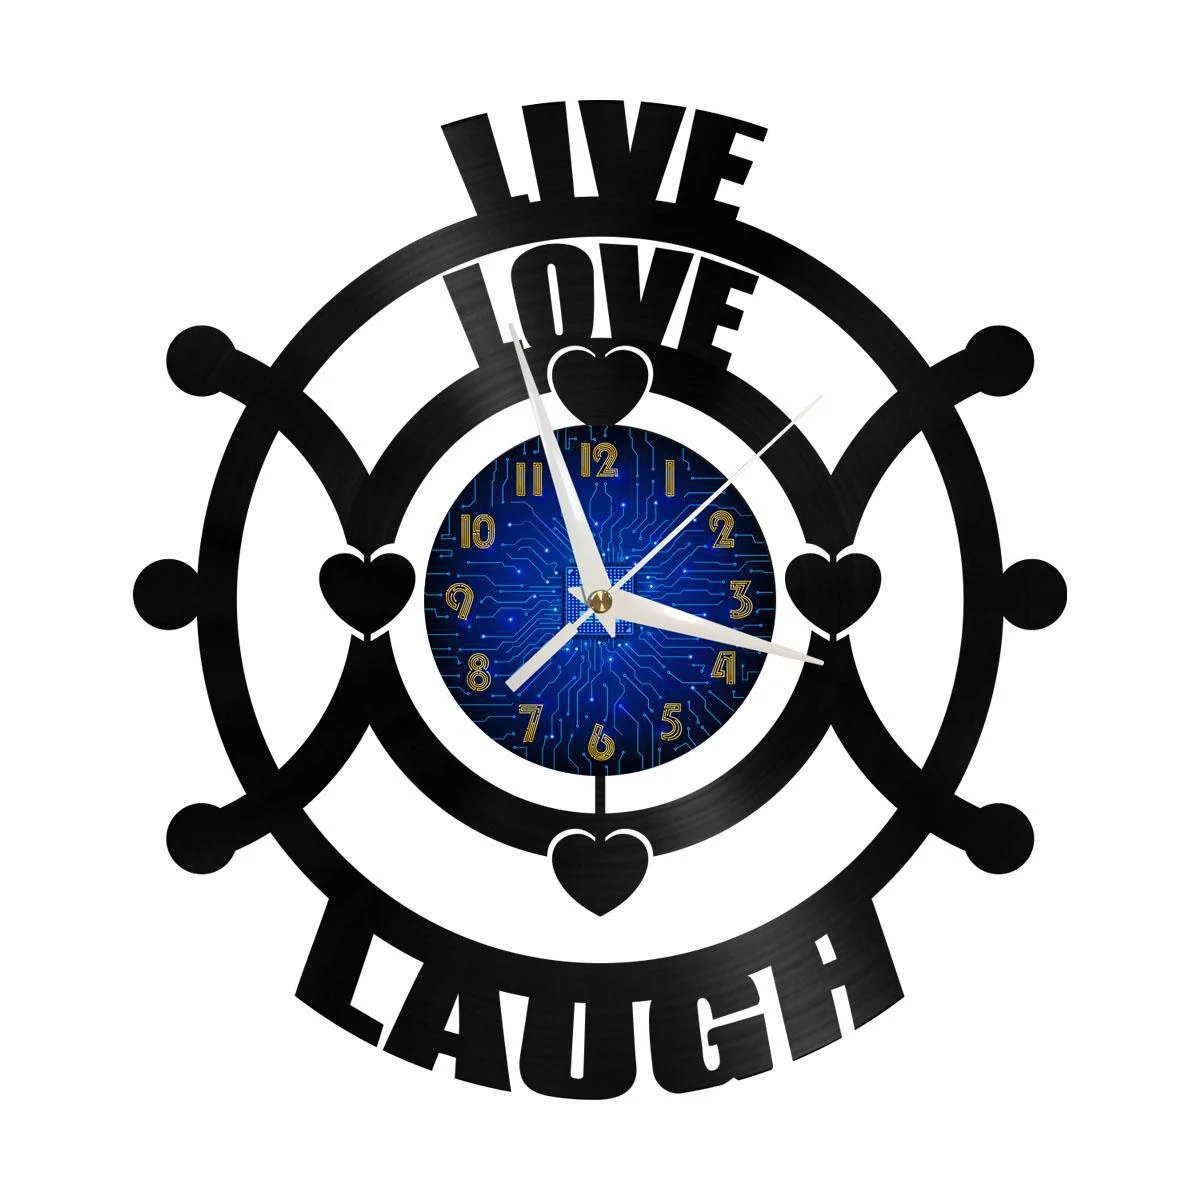 

Live Love Laugh Vinyl Wall Clock, Vinyl Record LED Clock Wall Art Black 12 Inch for Living Room Bedroom